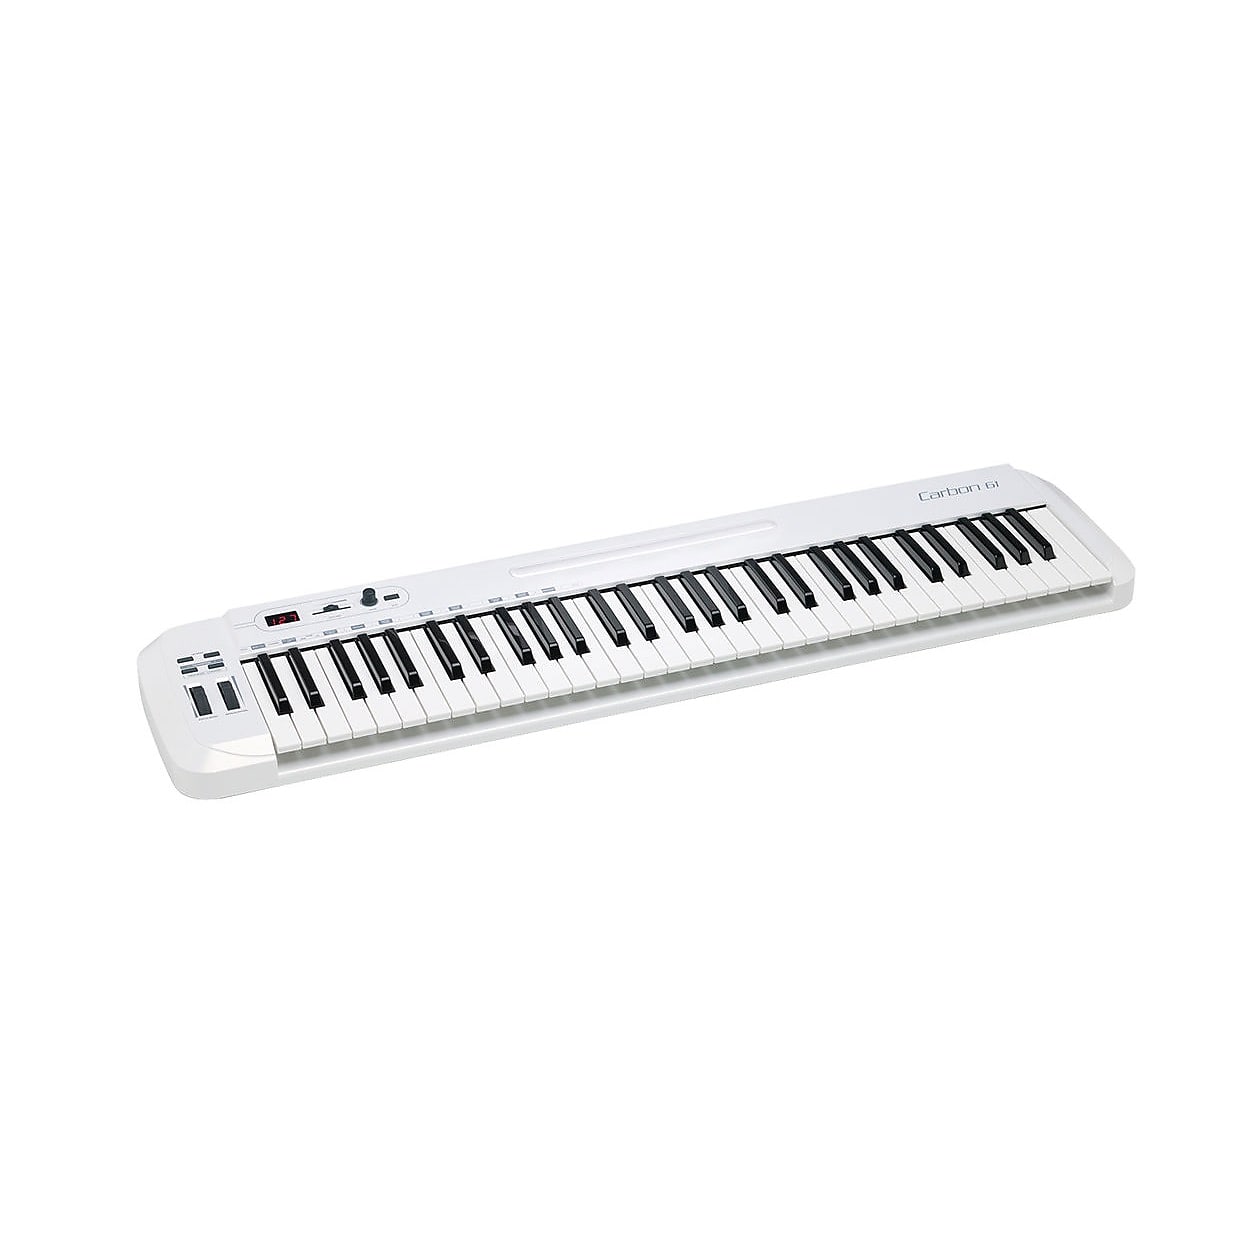 Samson Carbon 61 61-Key USB MIDI Controller Keyboard